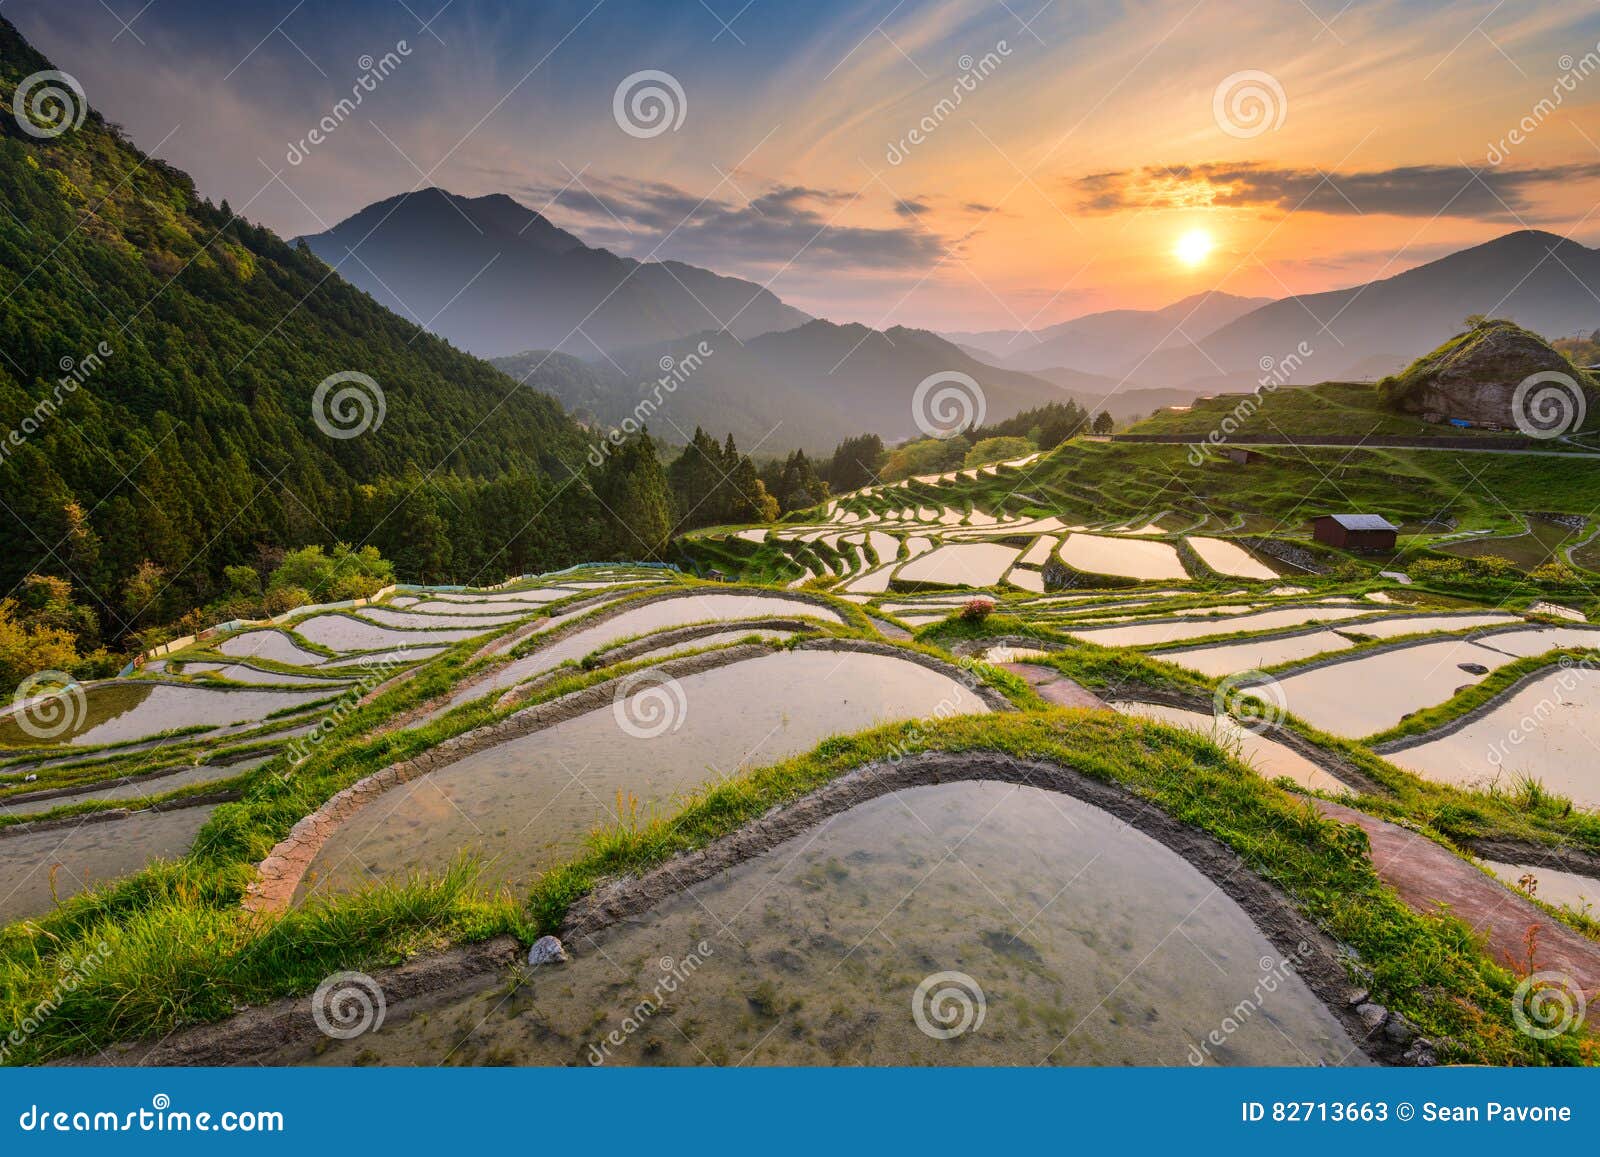 rice terraces in japan